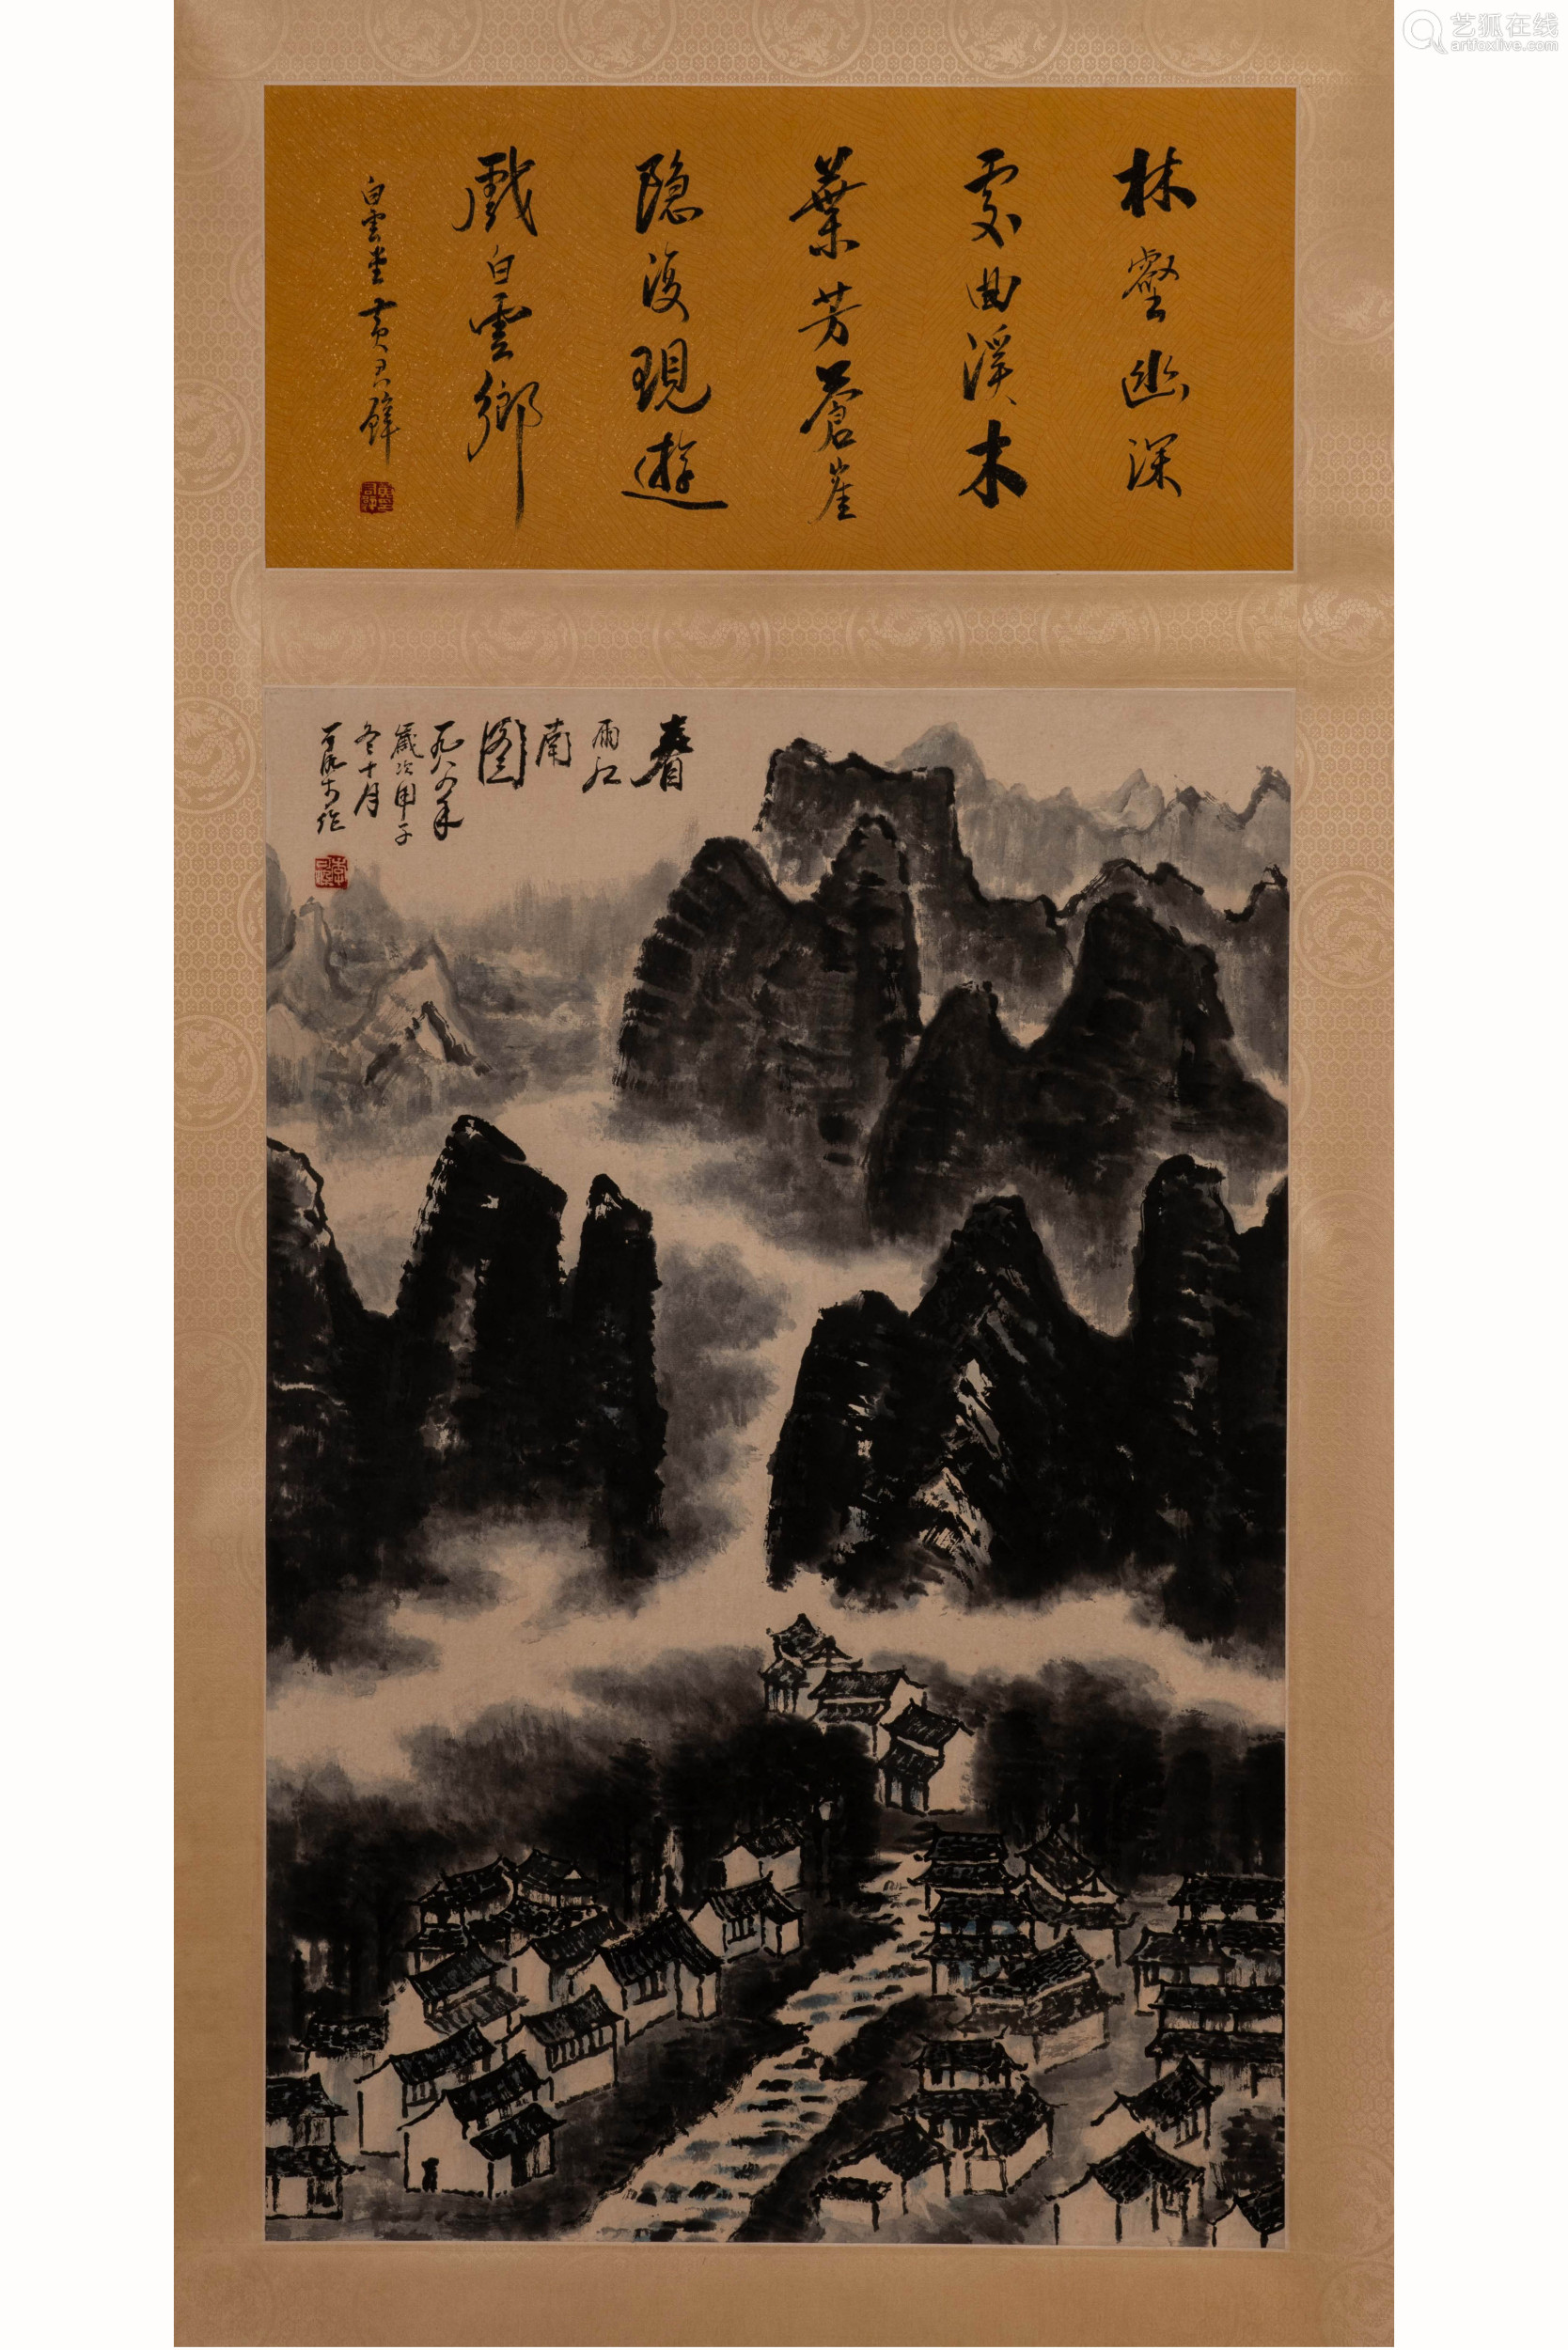 Li Keran's landscape vertical axis